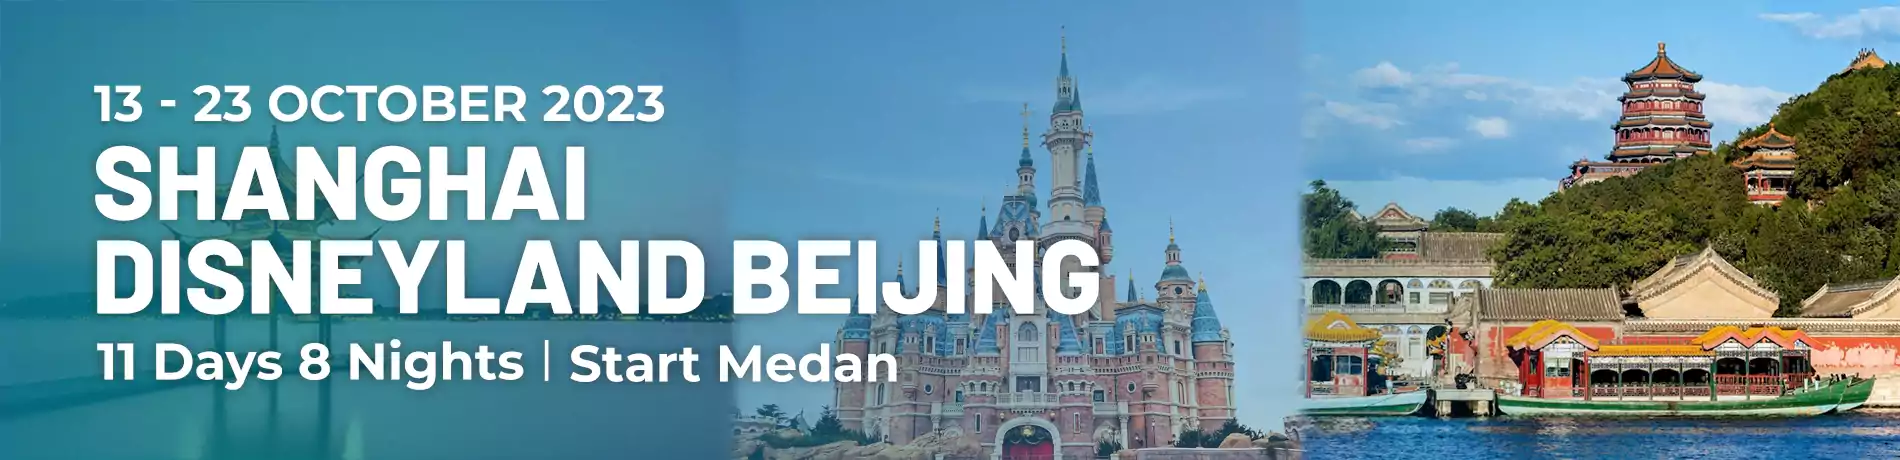 Tour Shanghai Disneyland Beijing 13OCT2023